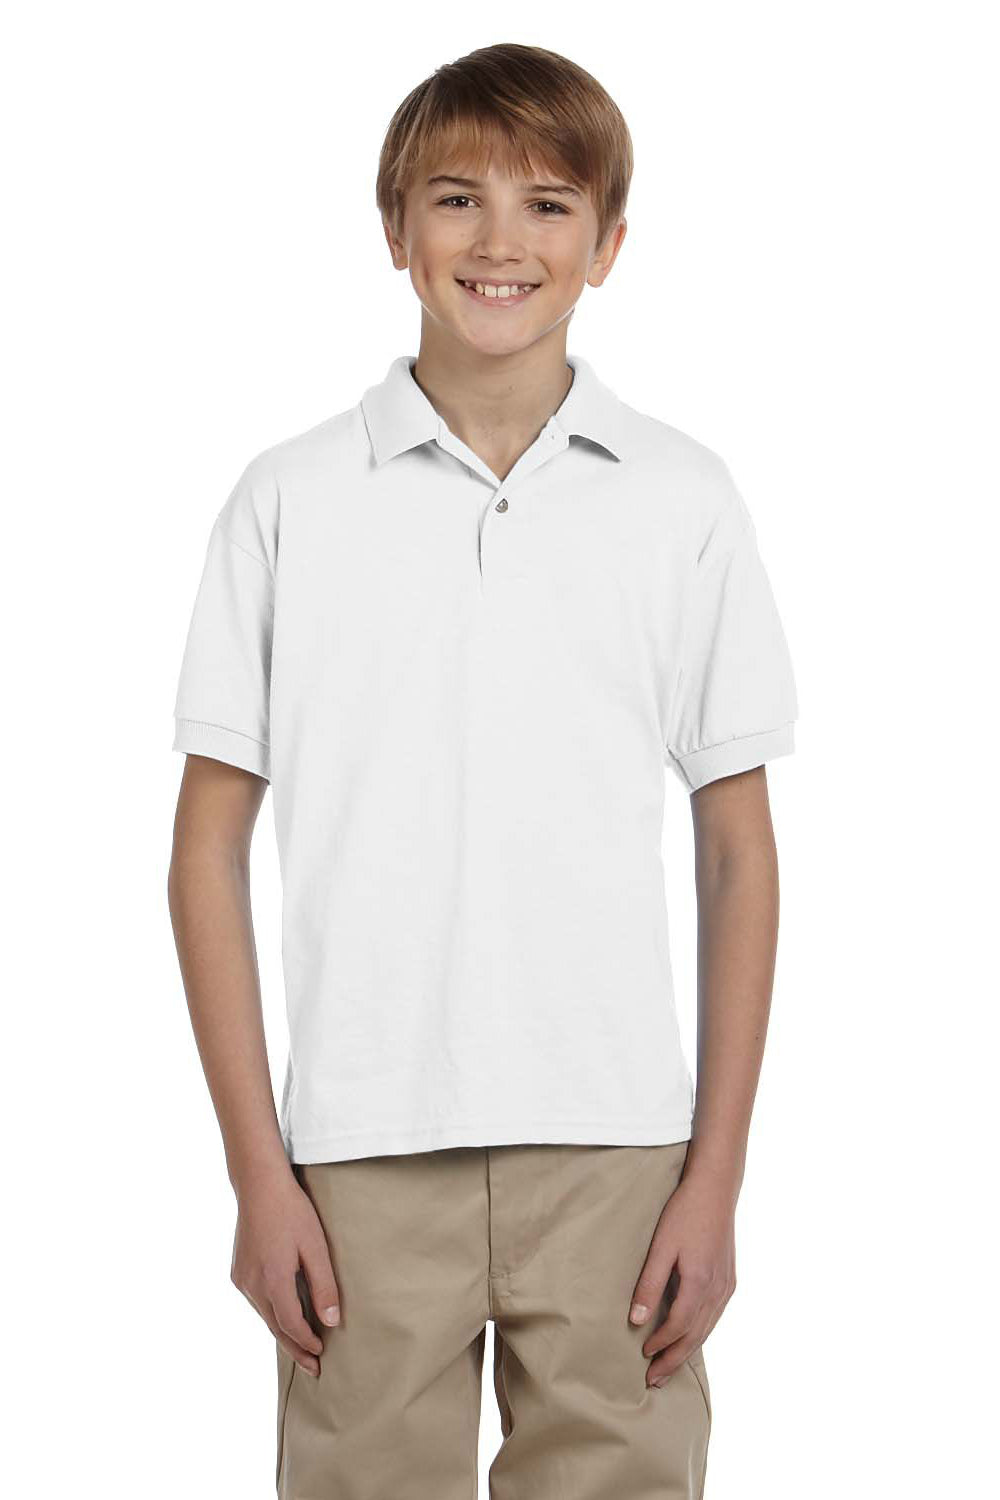 Gildan G880B Youth DryBlend Moisture Wicking Short Sleeve Polo Shirt White Front